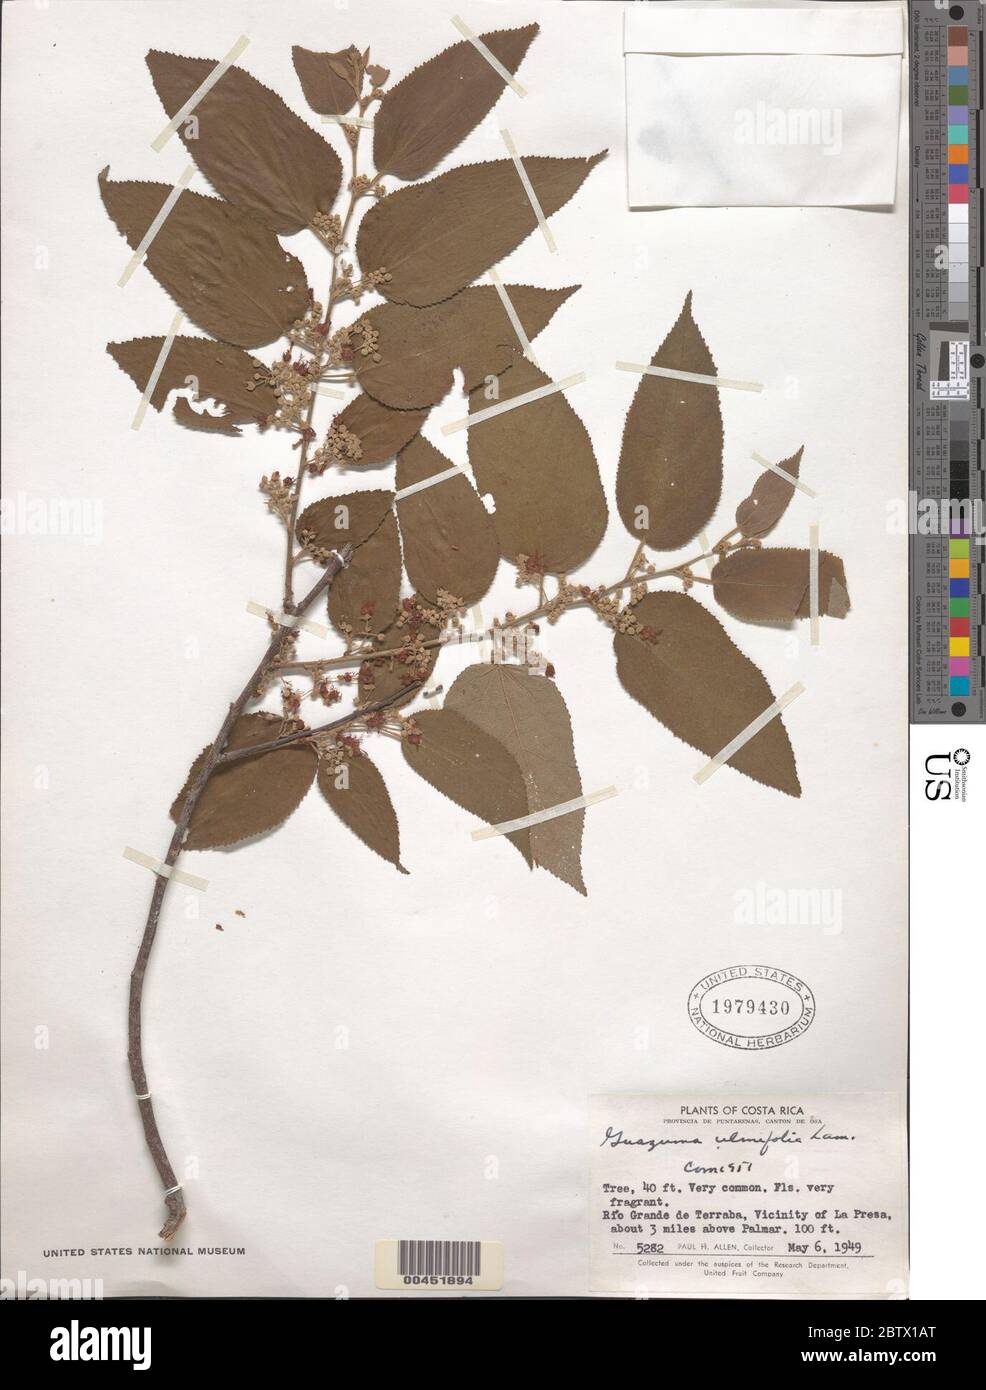 Guazuma ulmifolia Lam. Stock Photo